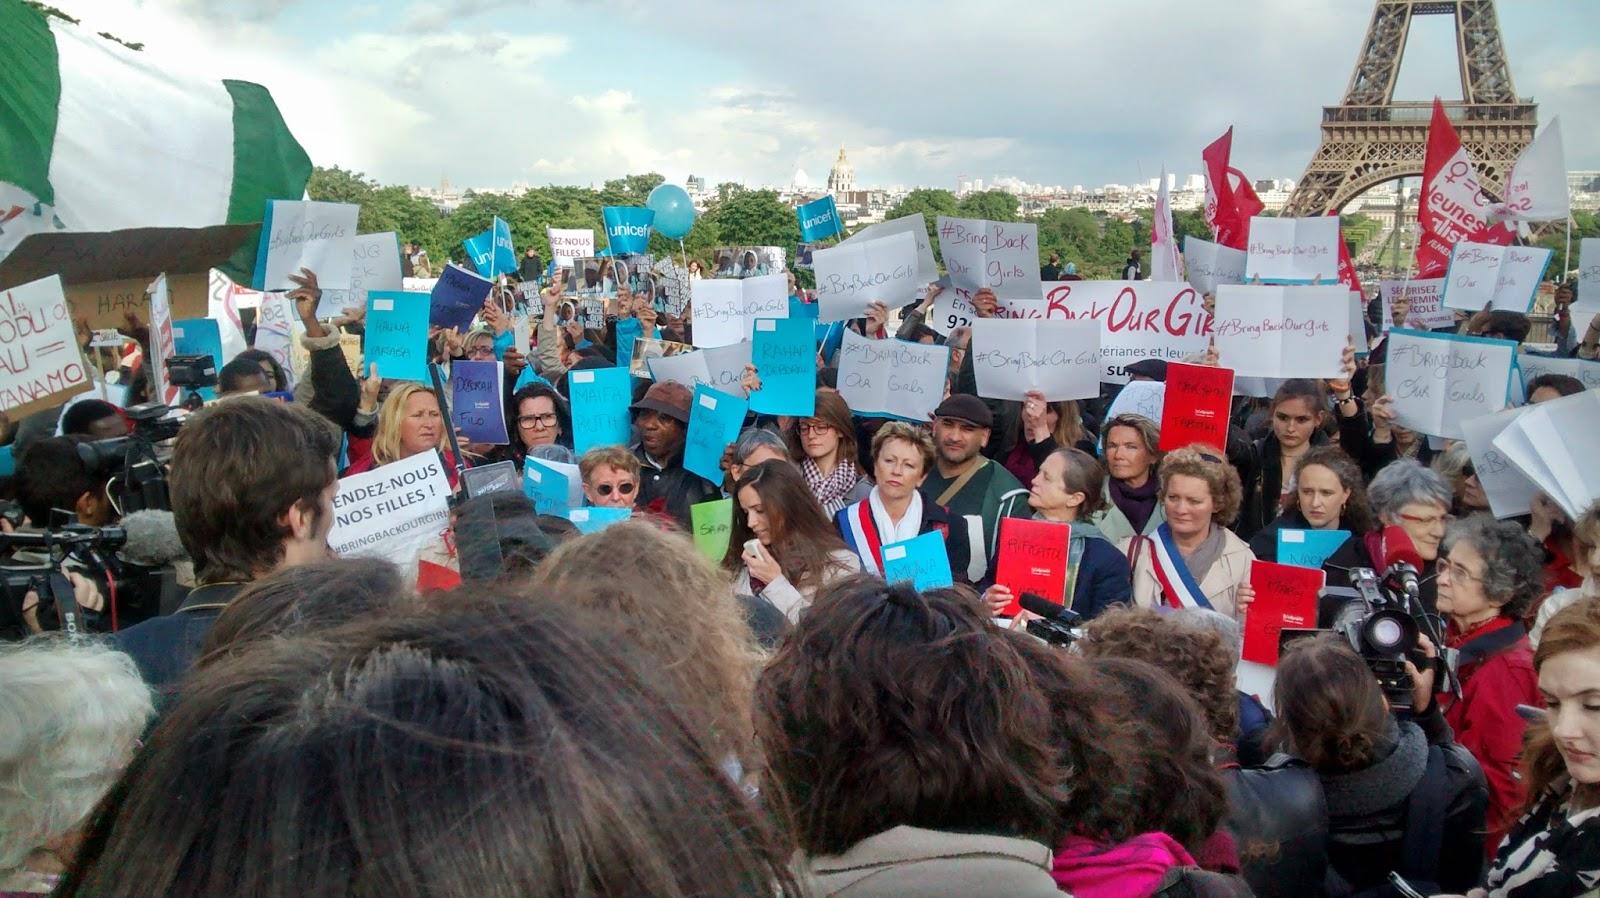 #Bringbackourgirls : Rassemblement du 14 Mai au Trocadéro de Paris